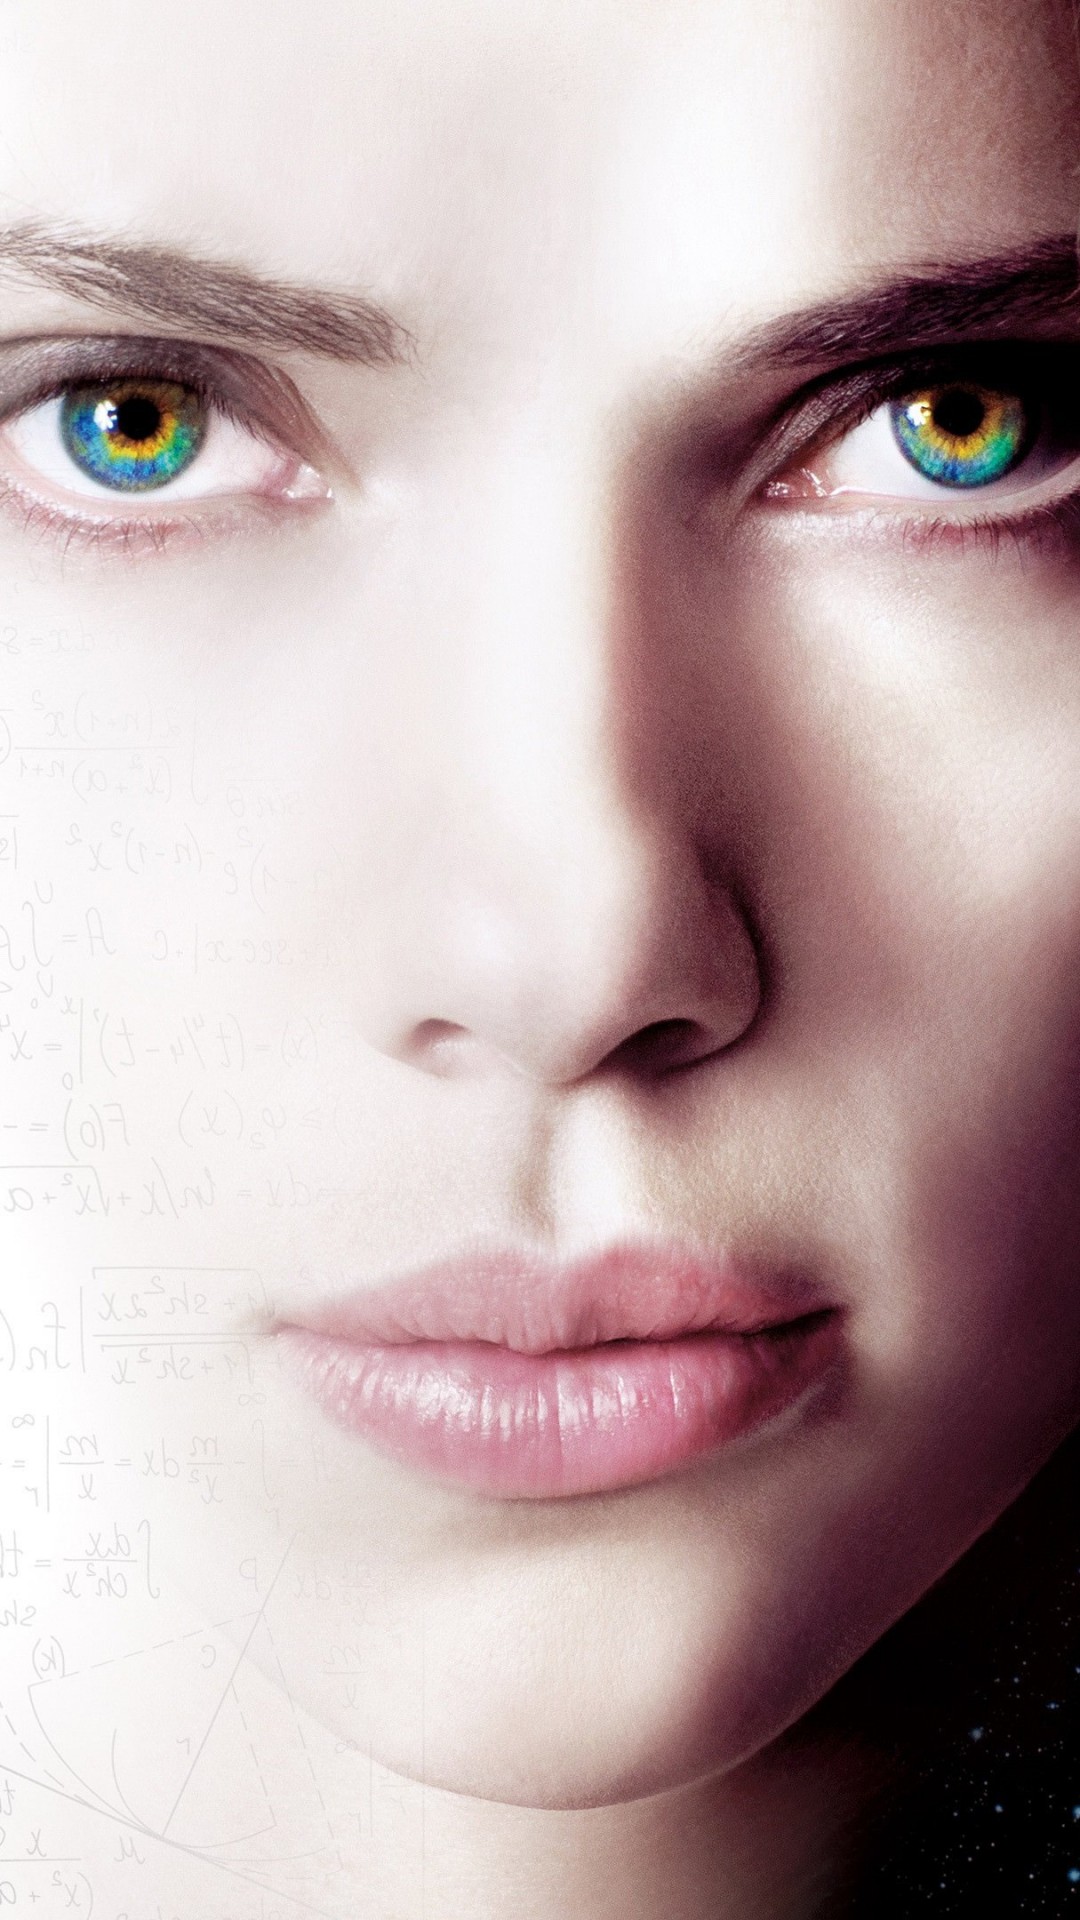 Scarlett Johansson As Lucy Wallpaper for SAMSUNG Galaxy S4